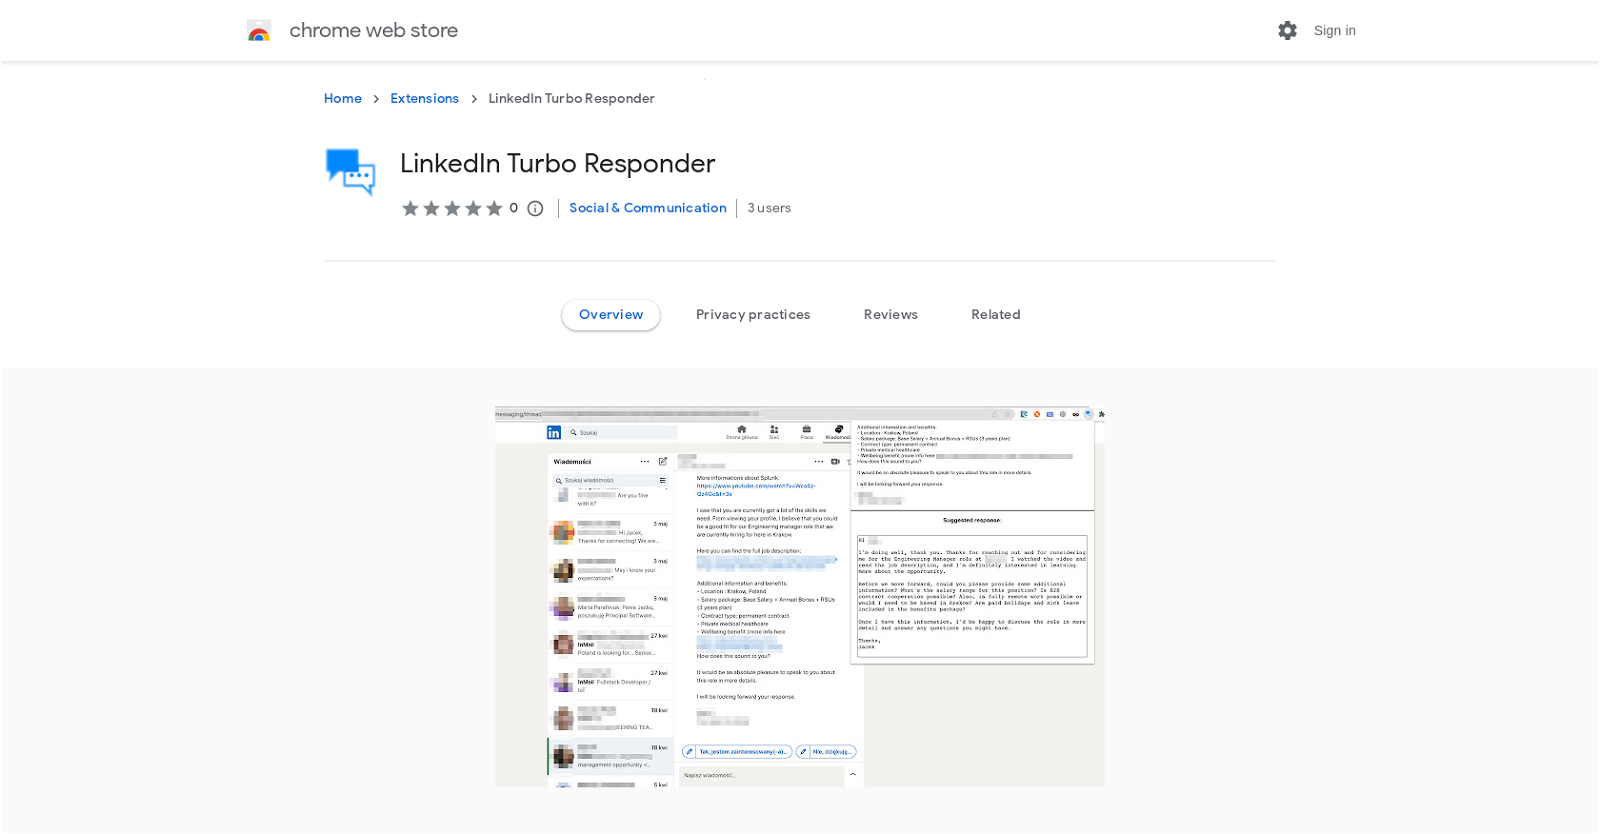 LinkedIn Turbo Responder website